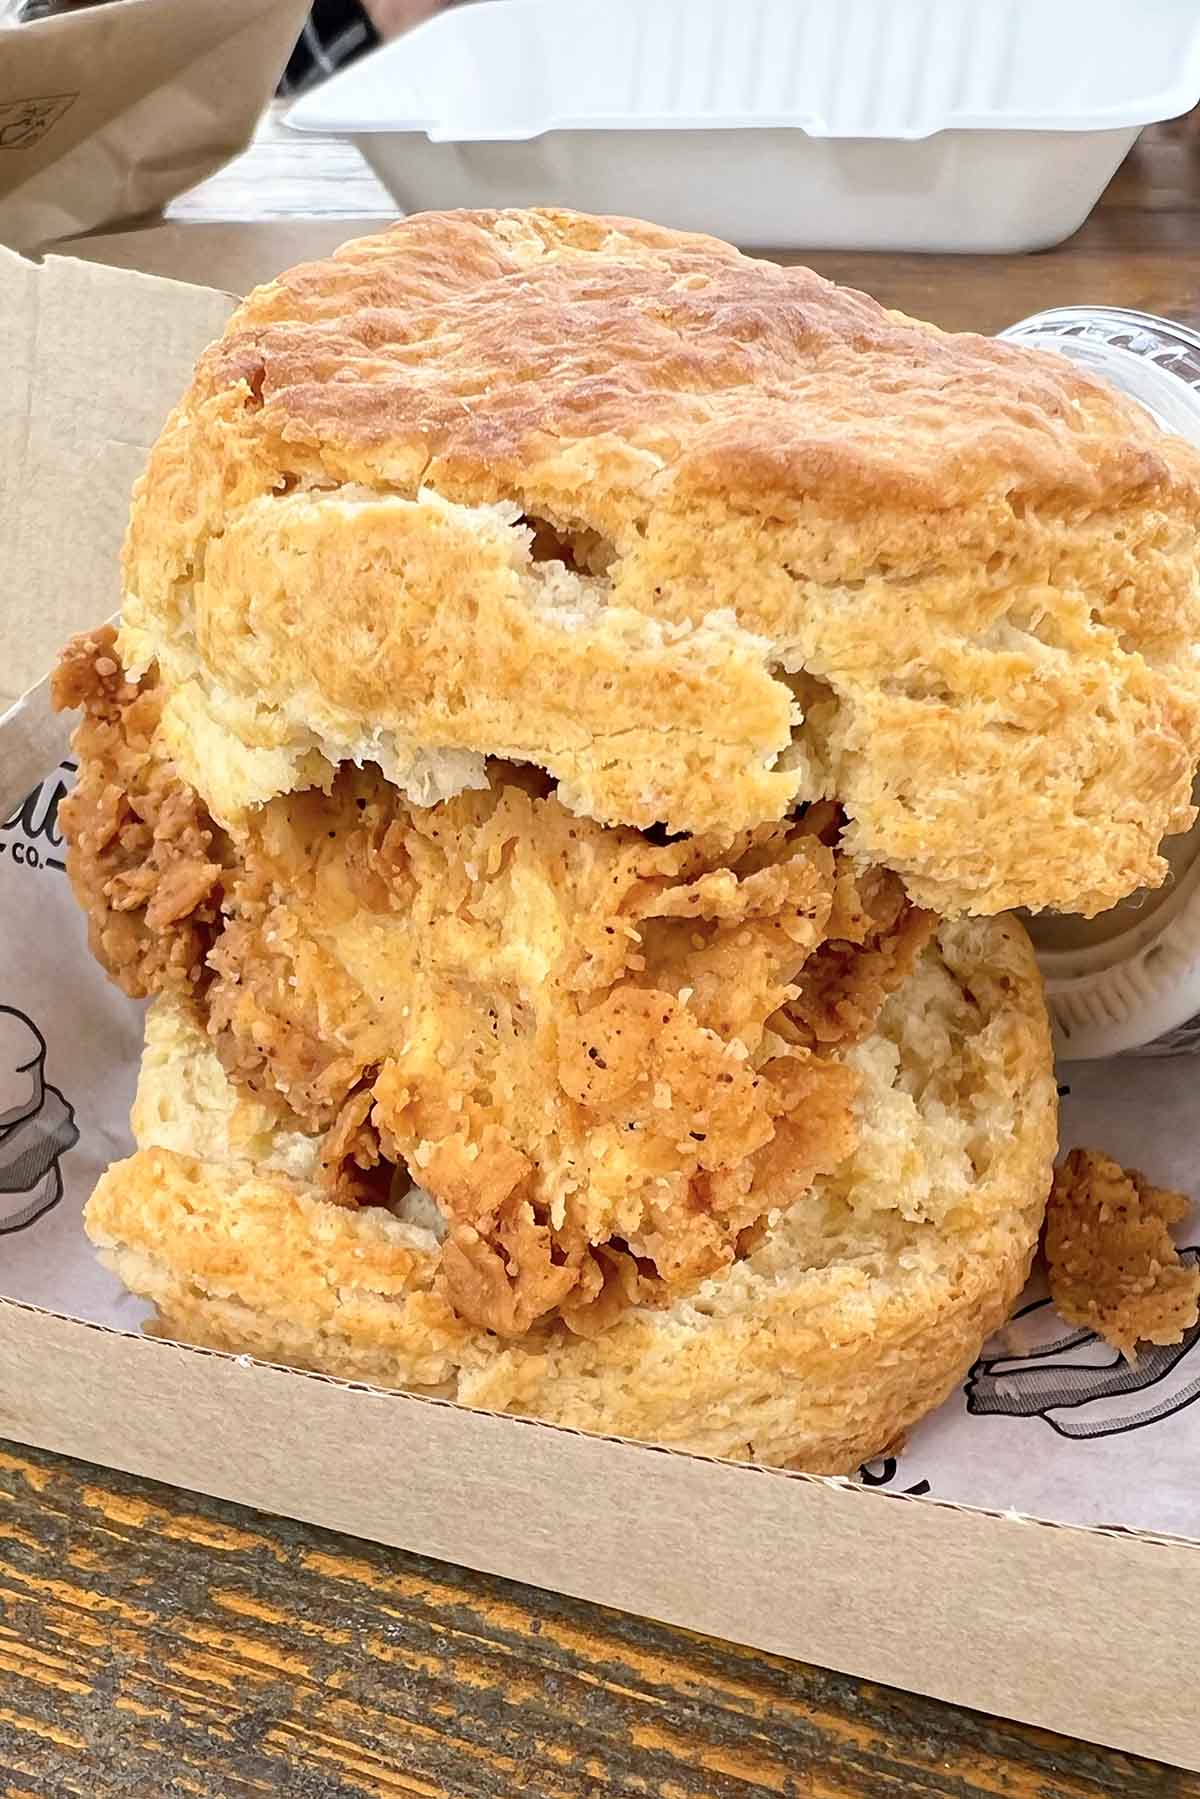 vegan chicken biscuit in a cardboard food box